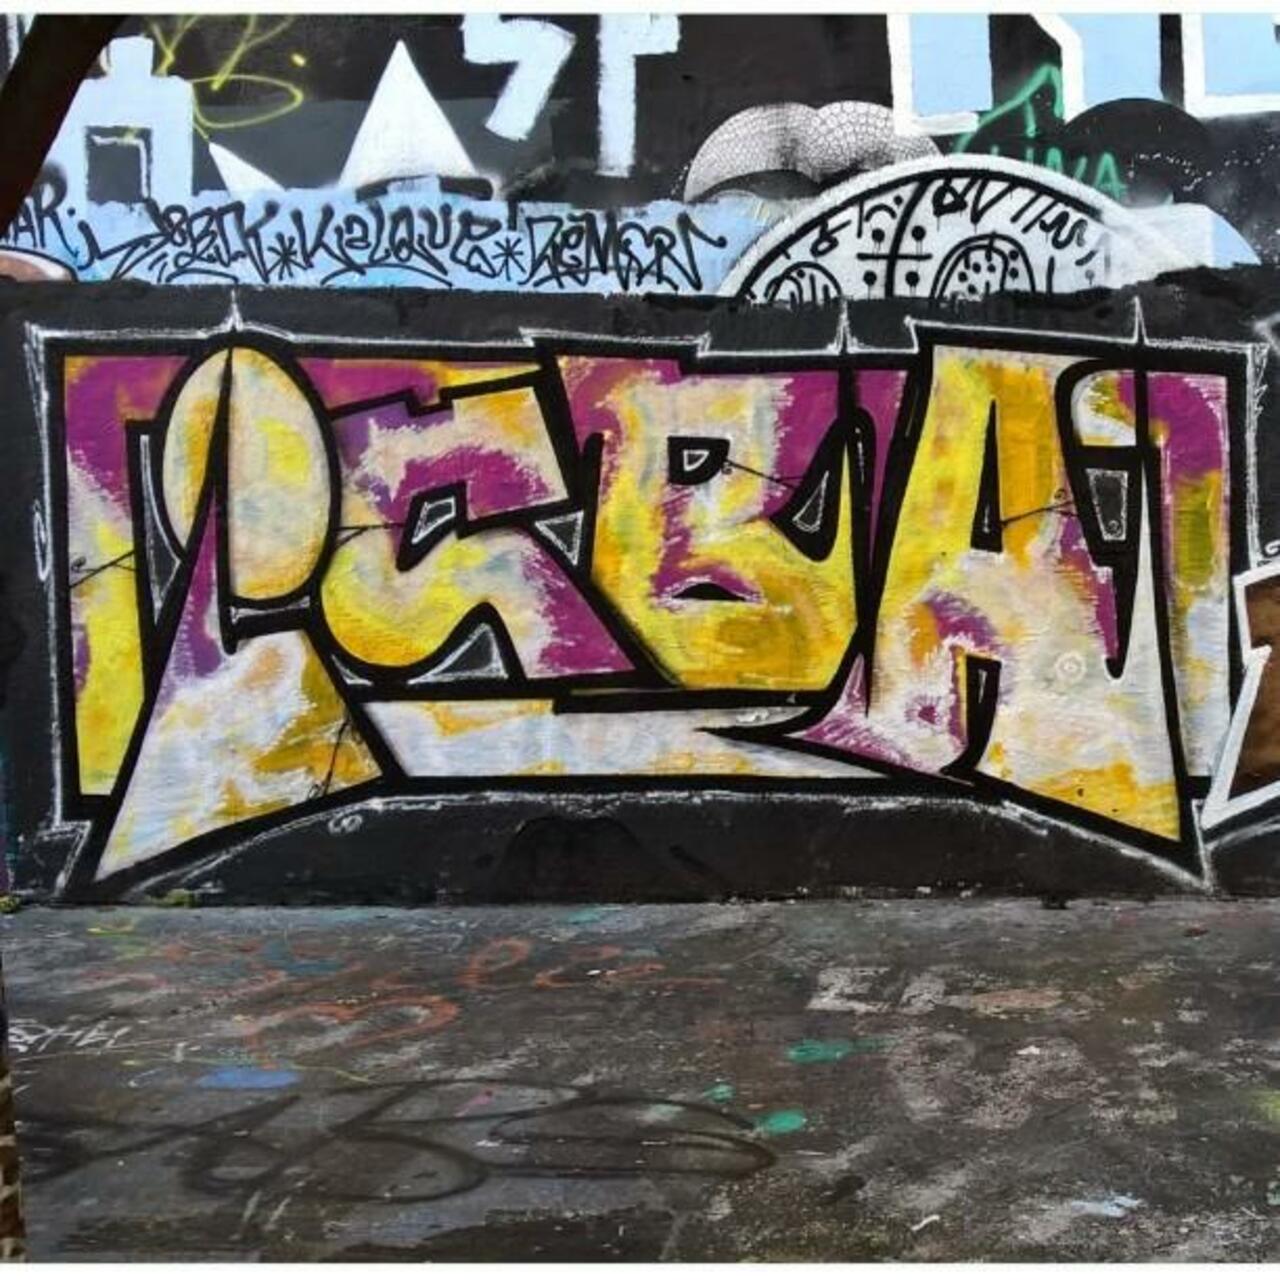 #streetart #graffiti #graff #art #fatcap #bombing #sprayart #spraycanart #wallart #handstyle #lettering #urbanart #… http://t.co/Pk9SgwssrN